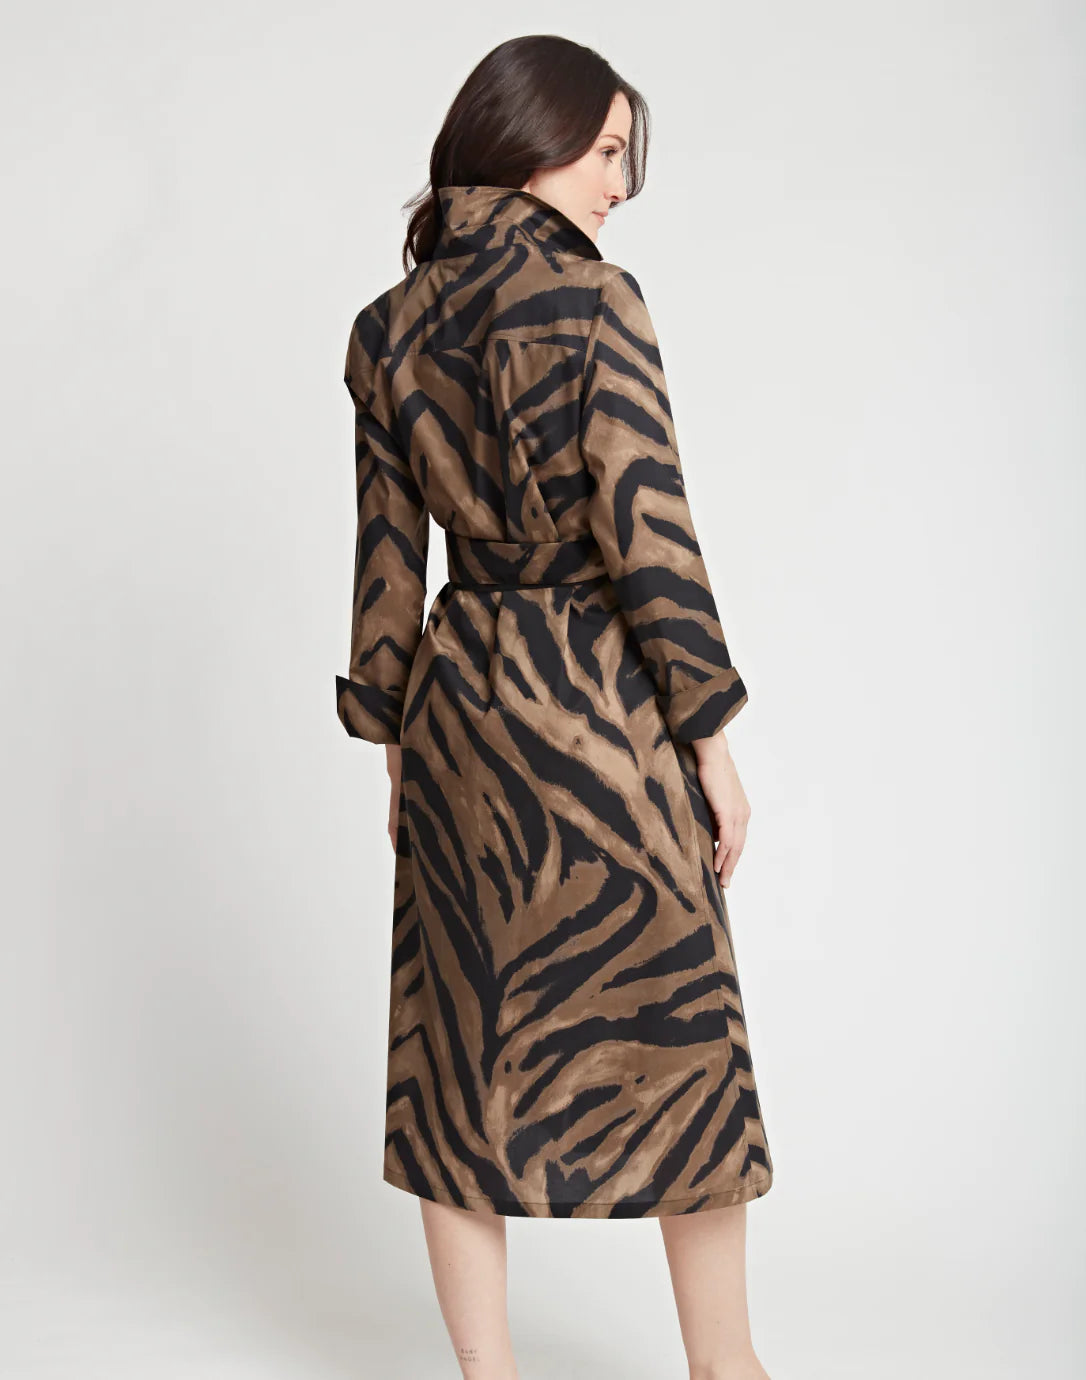 Hinson Wu Tamron Long Sleeve Abstract Dress - Zebra Print